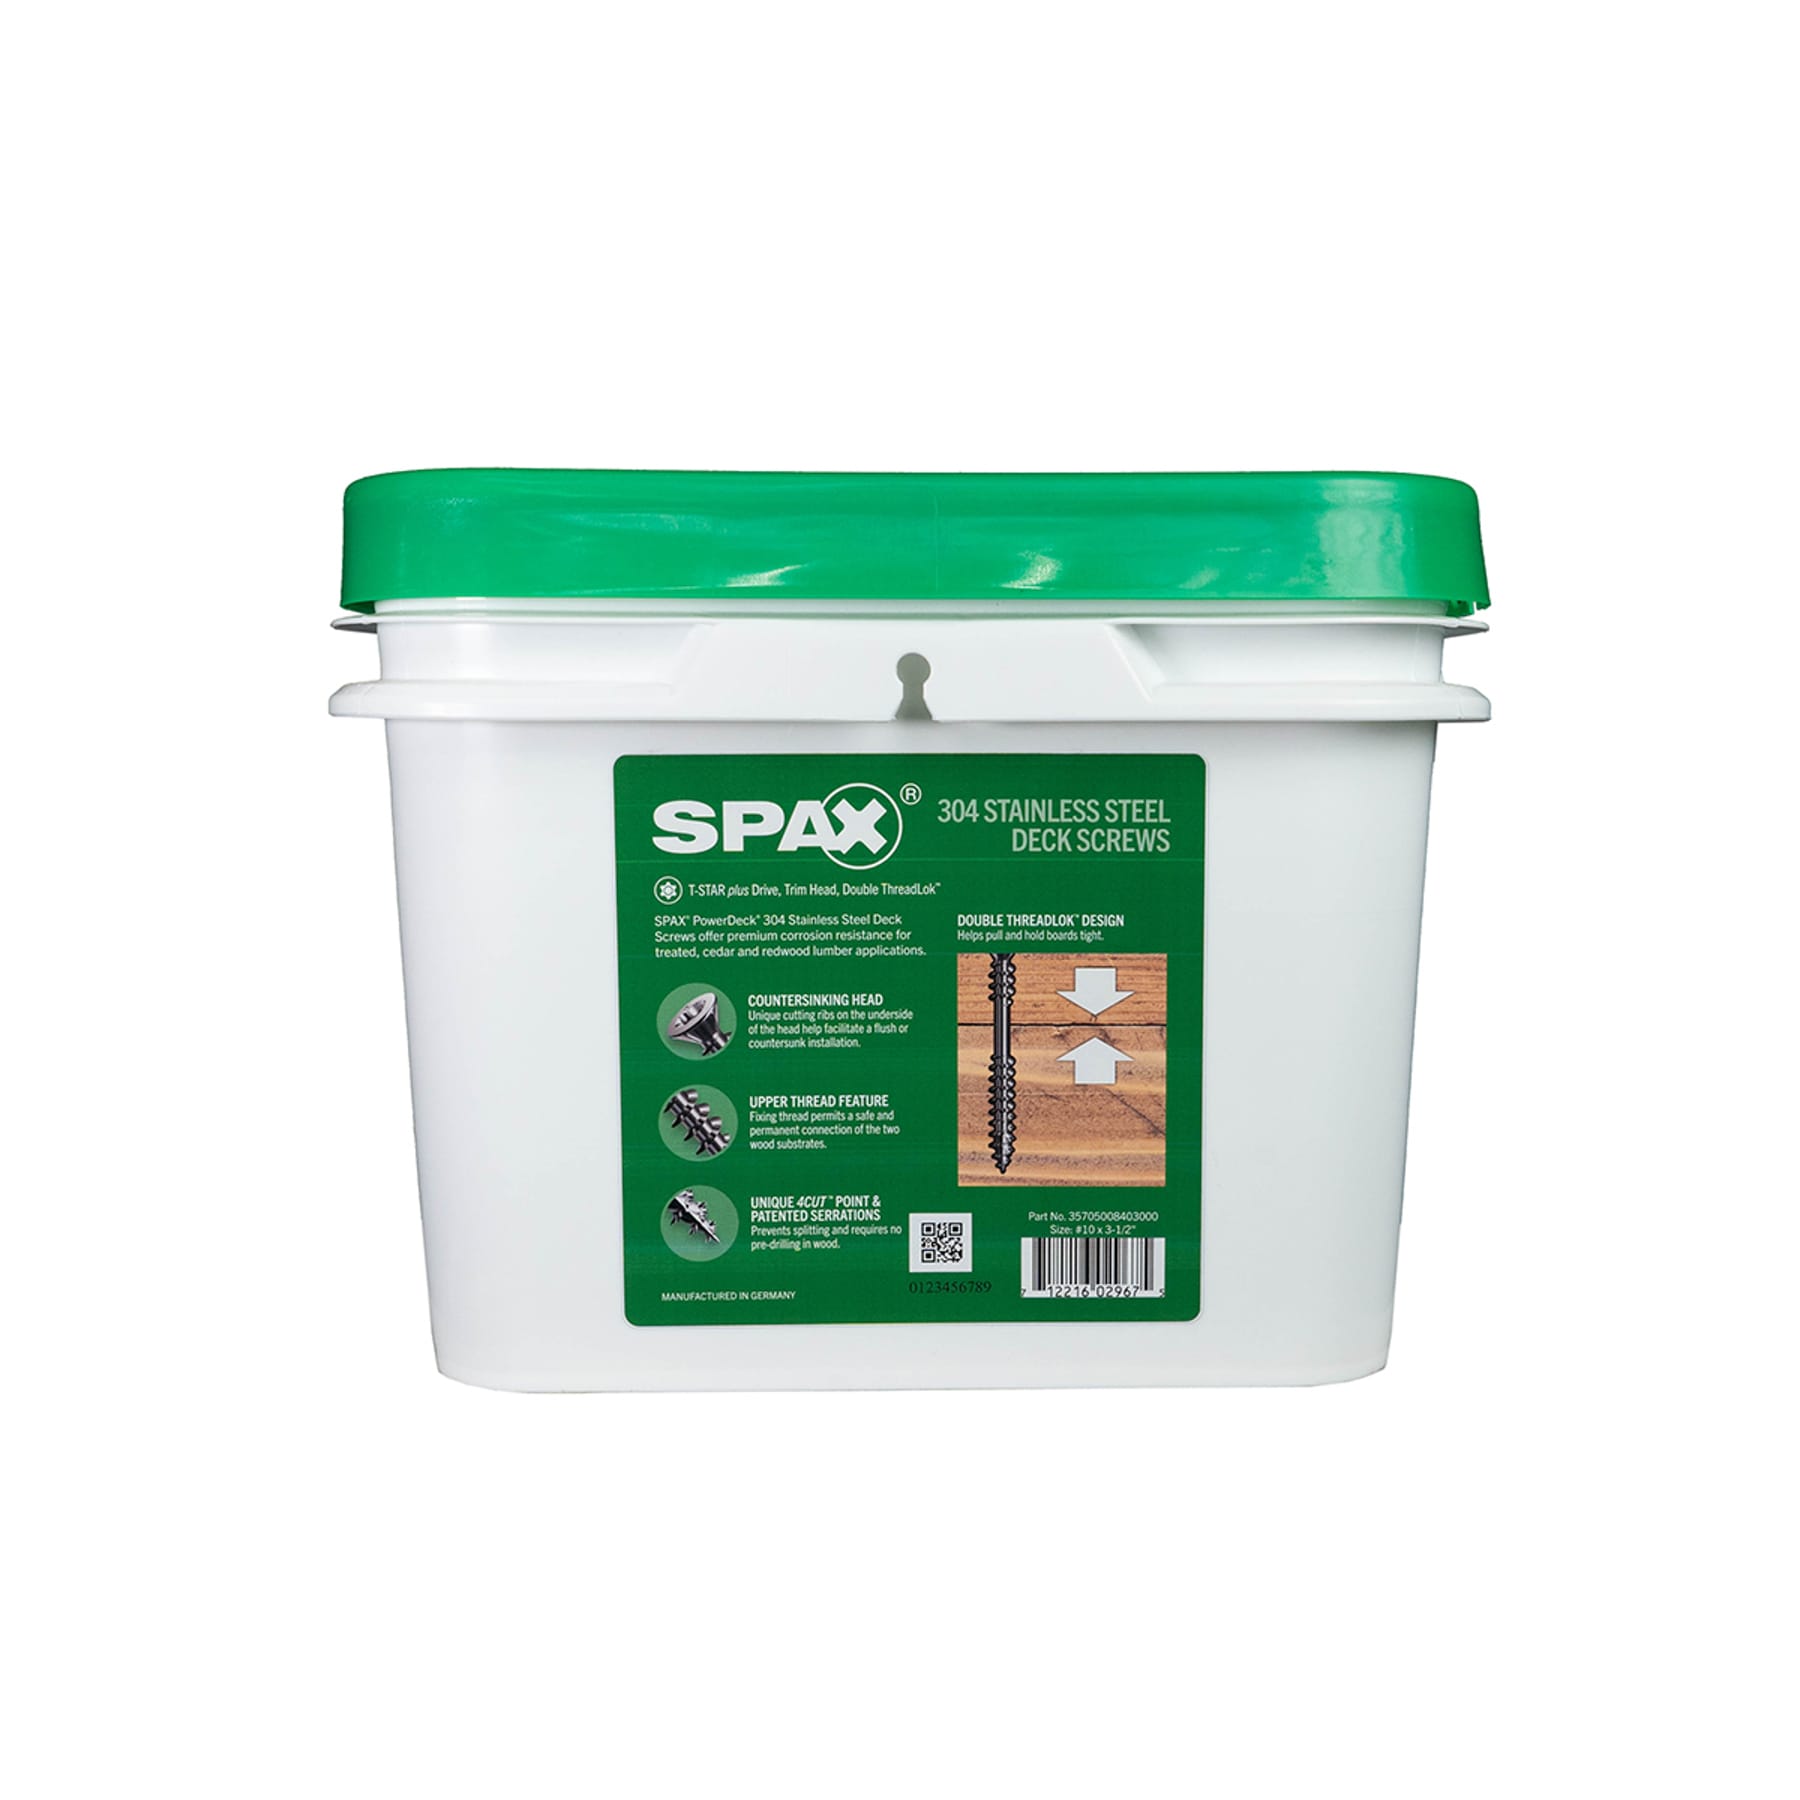 SPAX #8 x 3/4-in Zinc-Plated Multi-Material SPAX Multi-Purpose